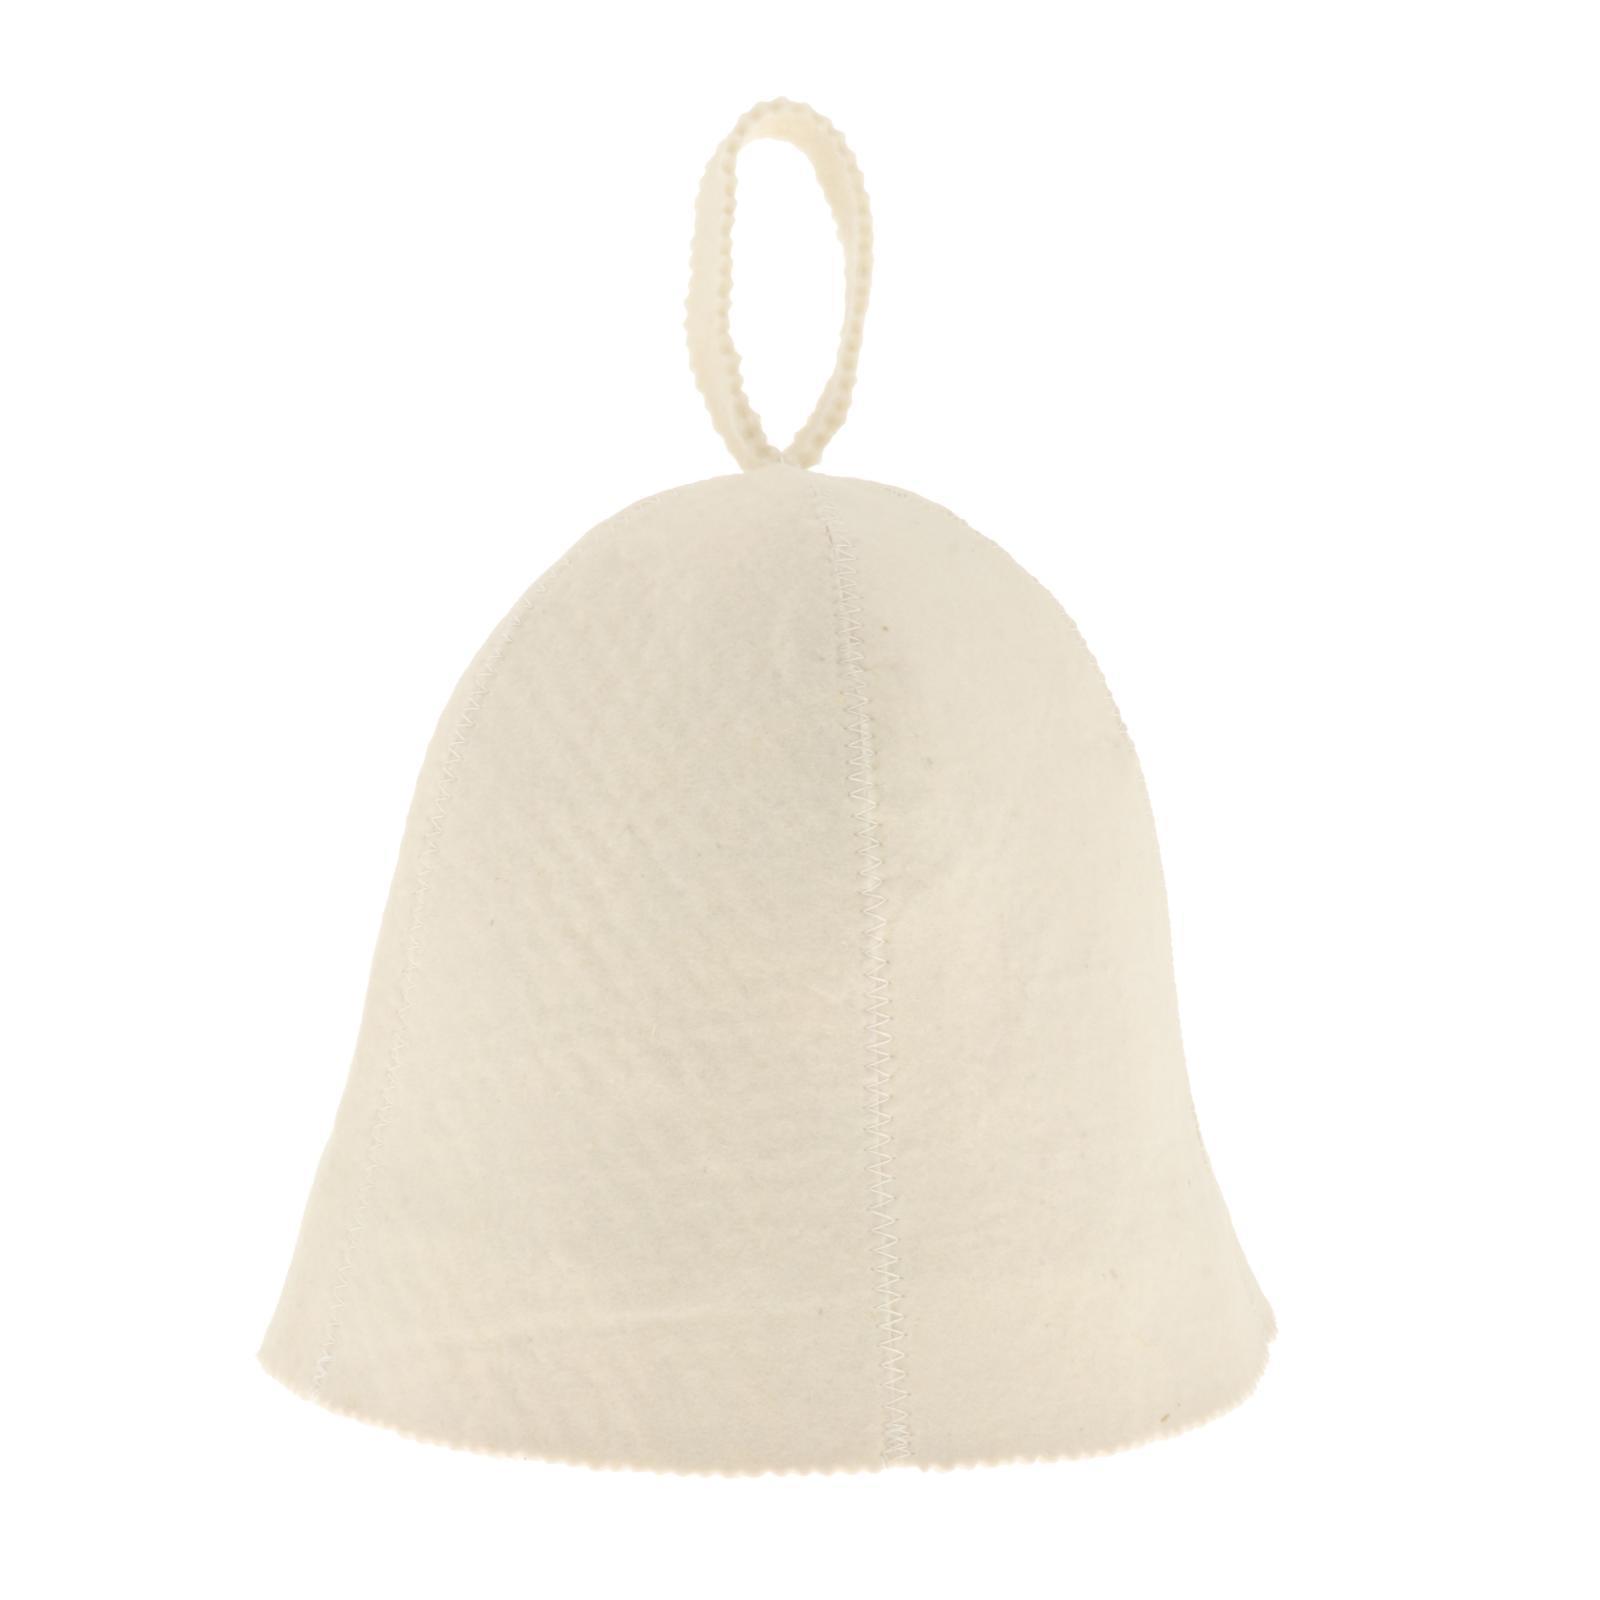 2x Sauna Hat, Russian Banya, , 100% Wool Felt Lightweight Head Protection for